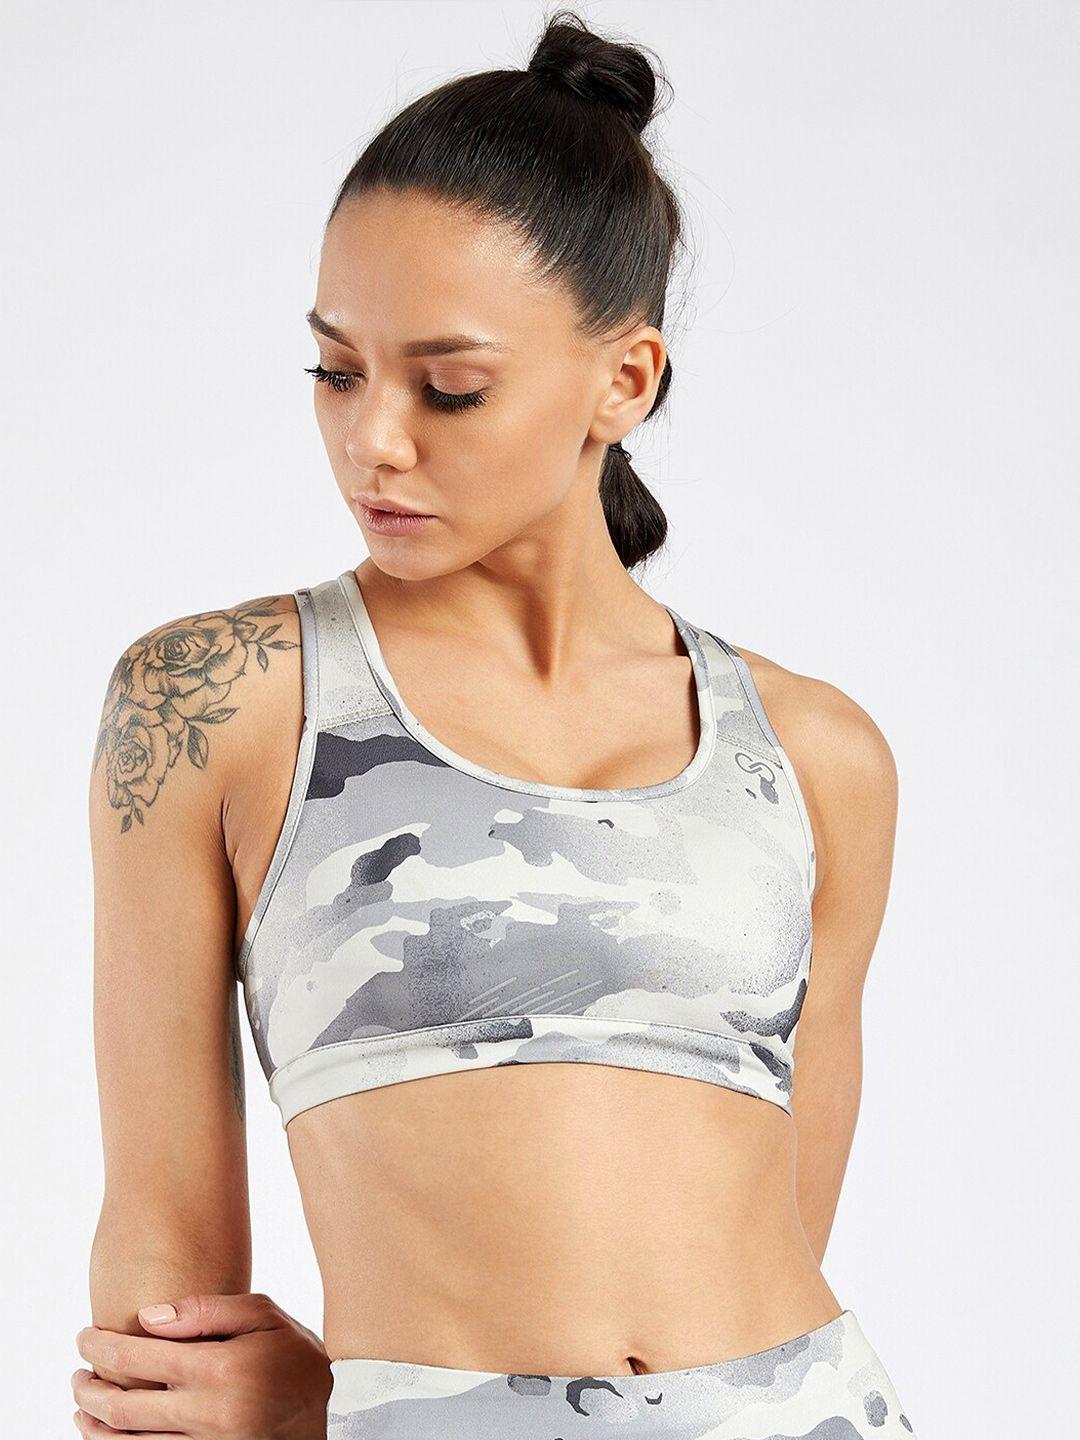 creez grey & white abstract printed anti-odour workout bra underwired